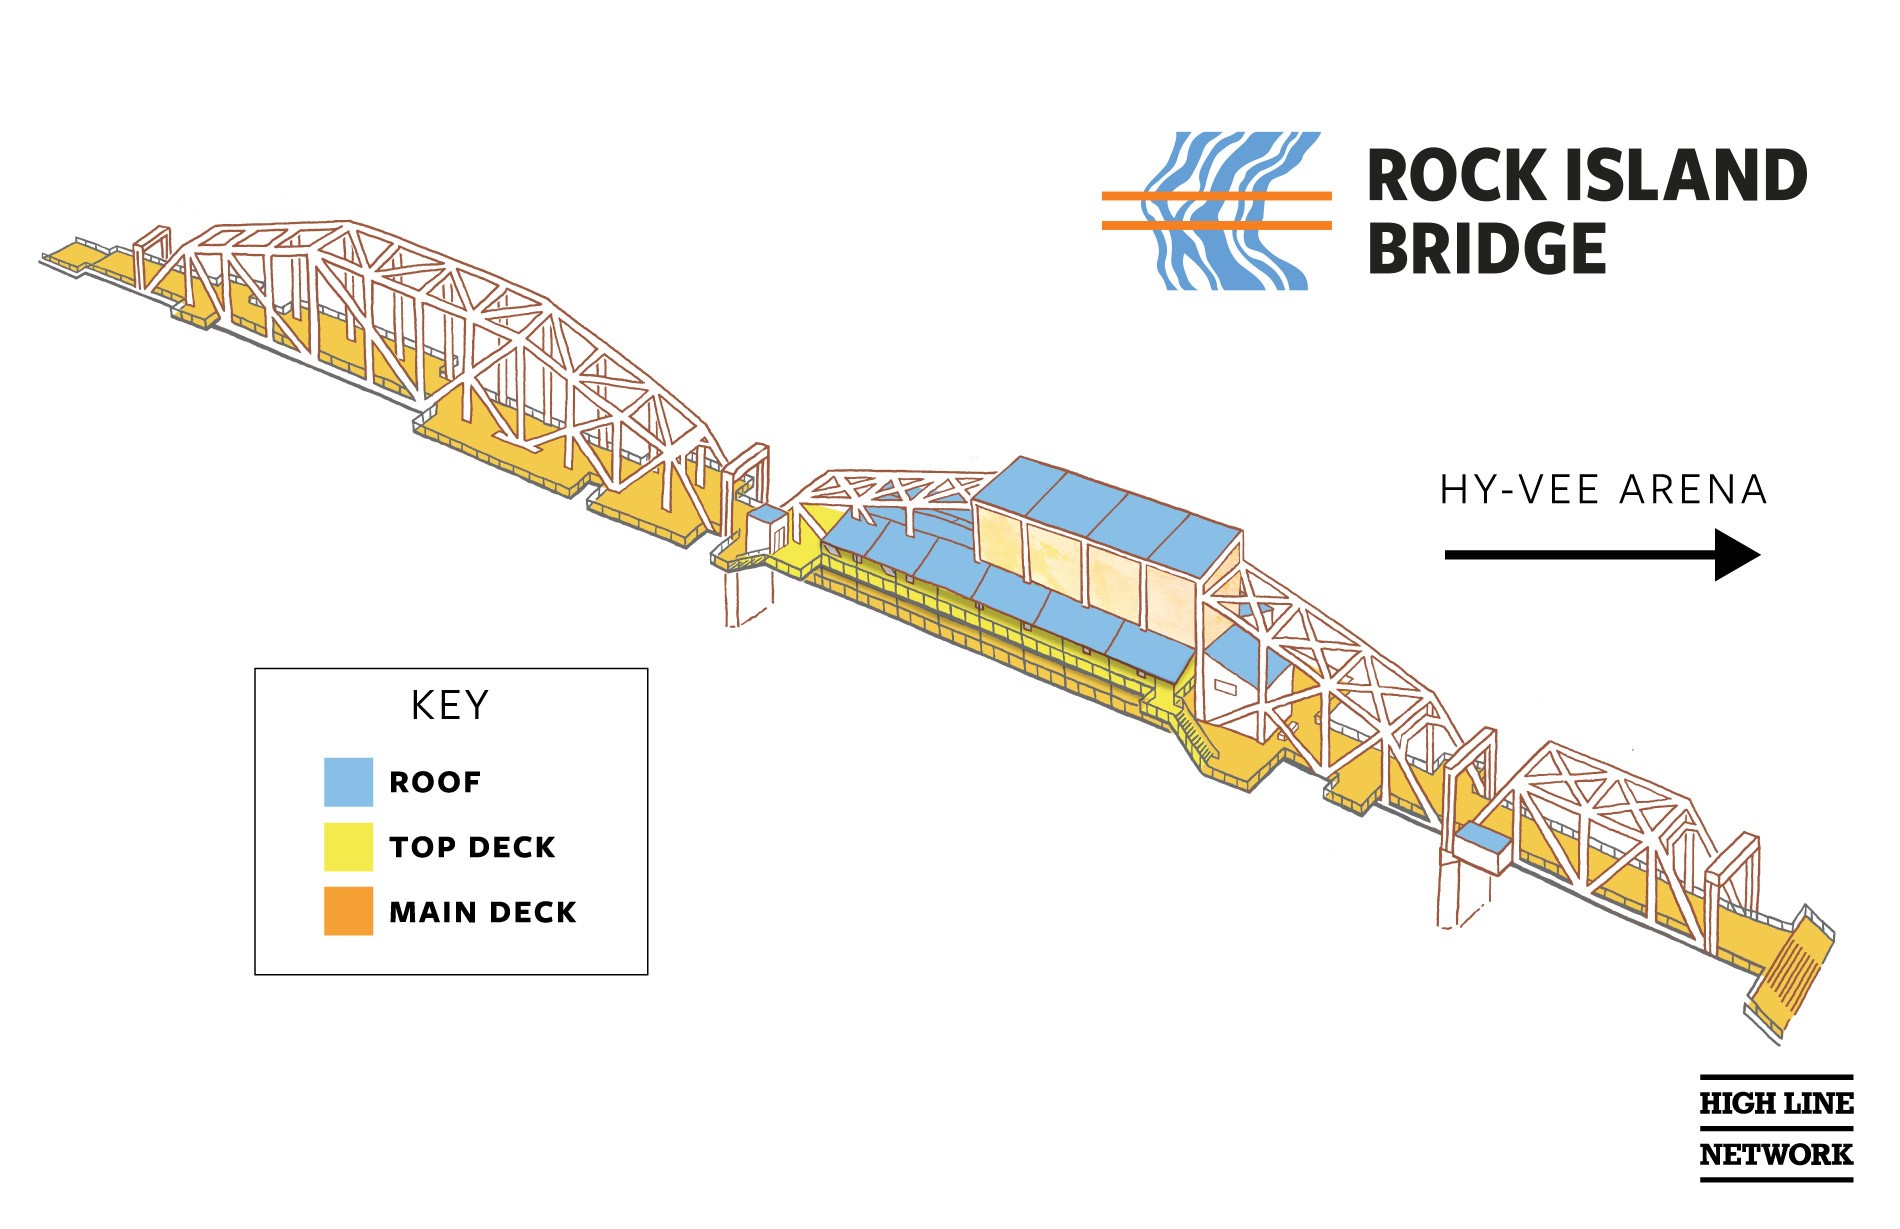 Diagram of roof, top deck, and main deck of Rock Island Bridge